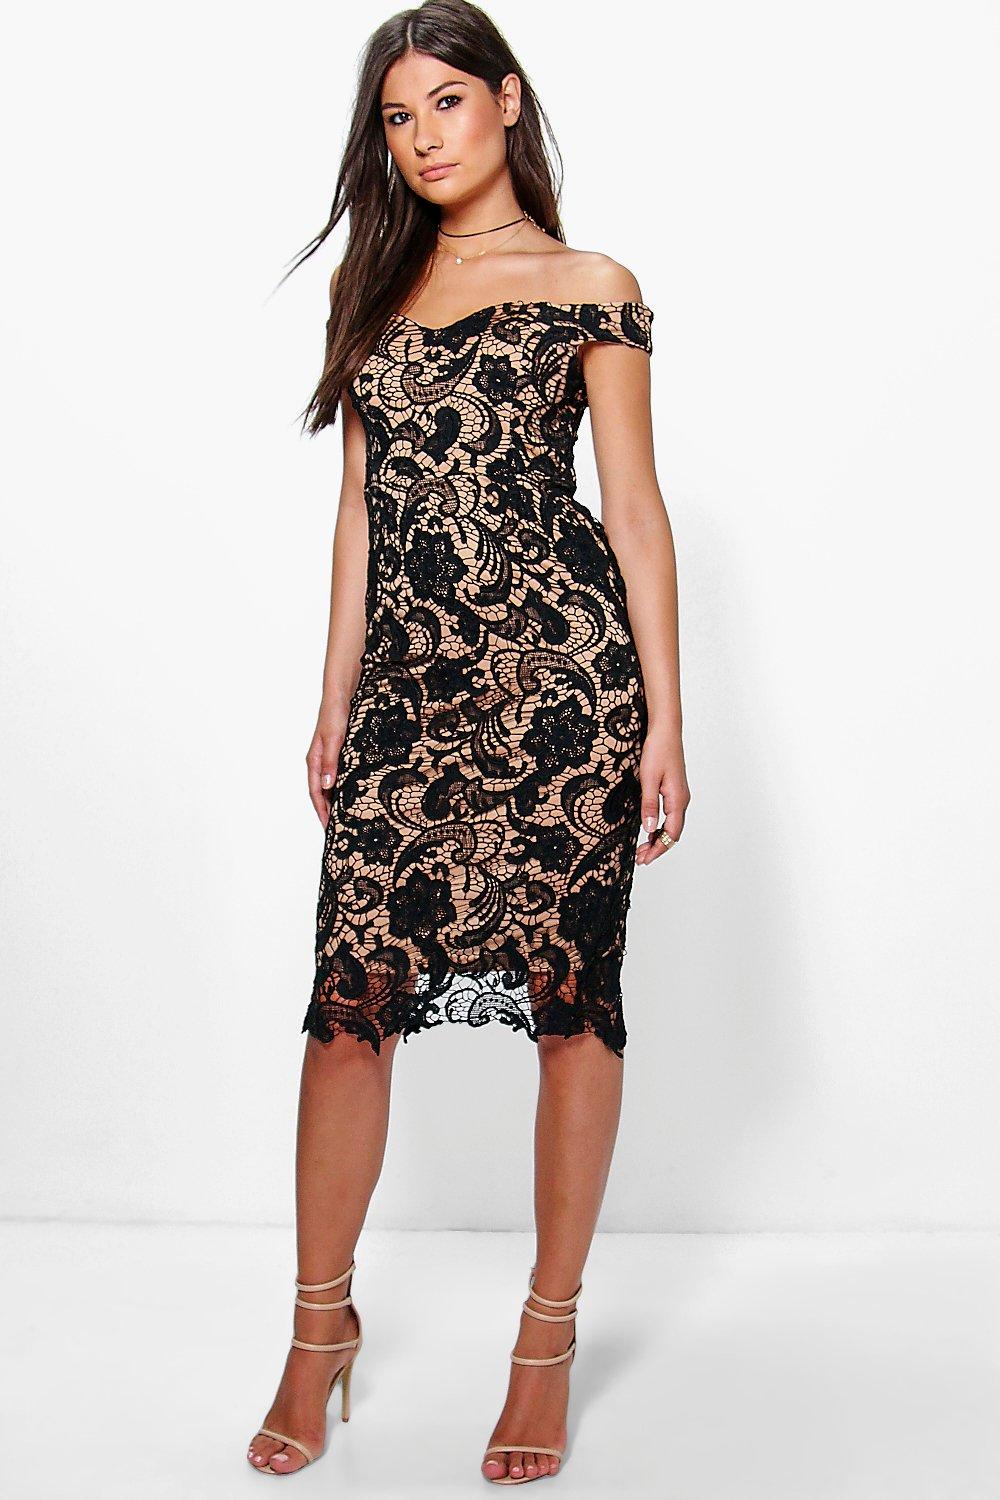 Boohoo Womens Boutique Marcie Lace Off Shoulder Midi Dress | eBay